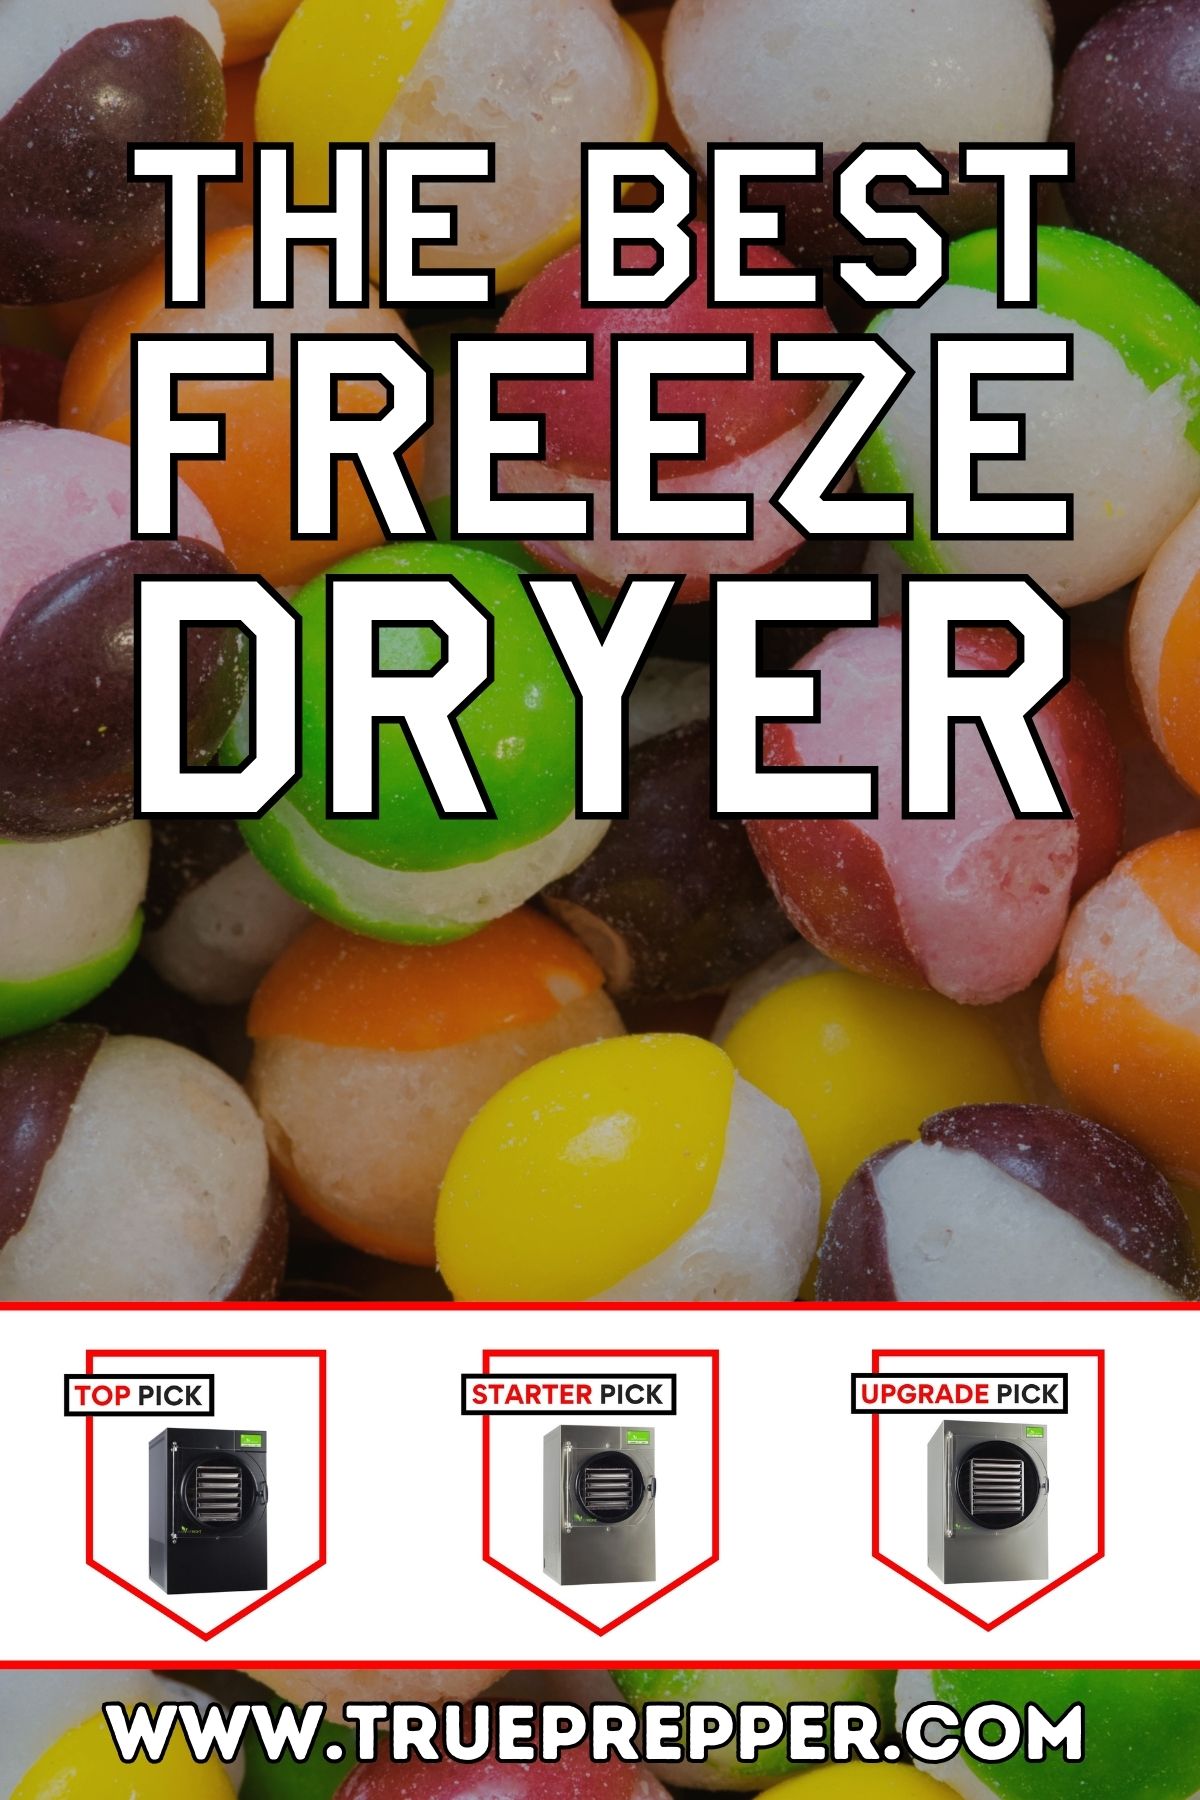 https://www.trueprepper.com/wp-content/uploads/The-Best-Freeze-Dryer.jpg